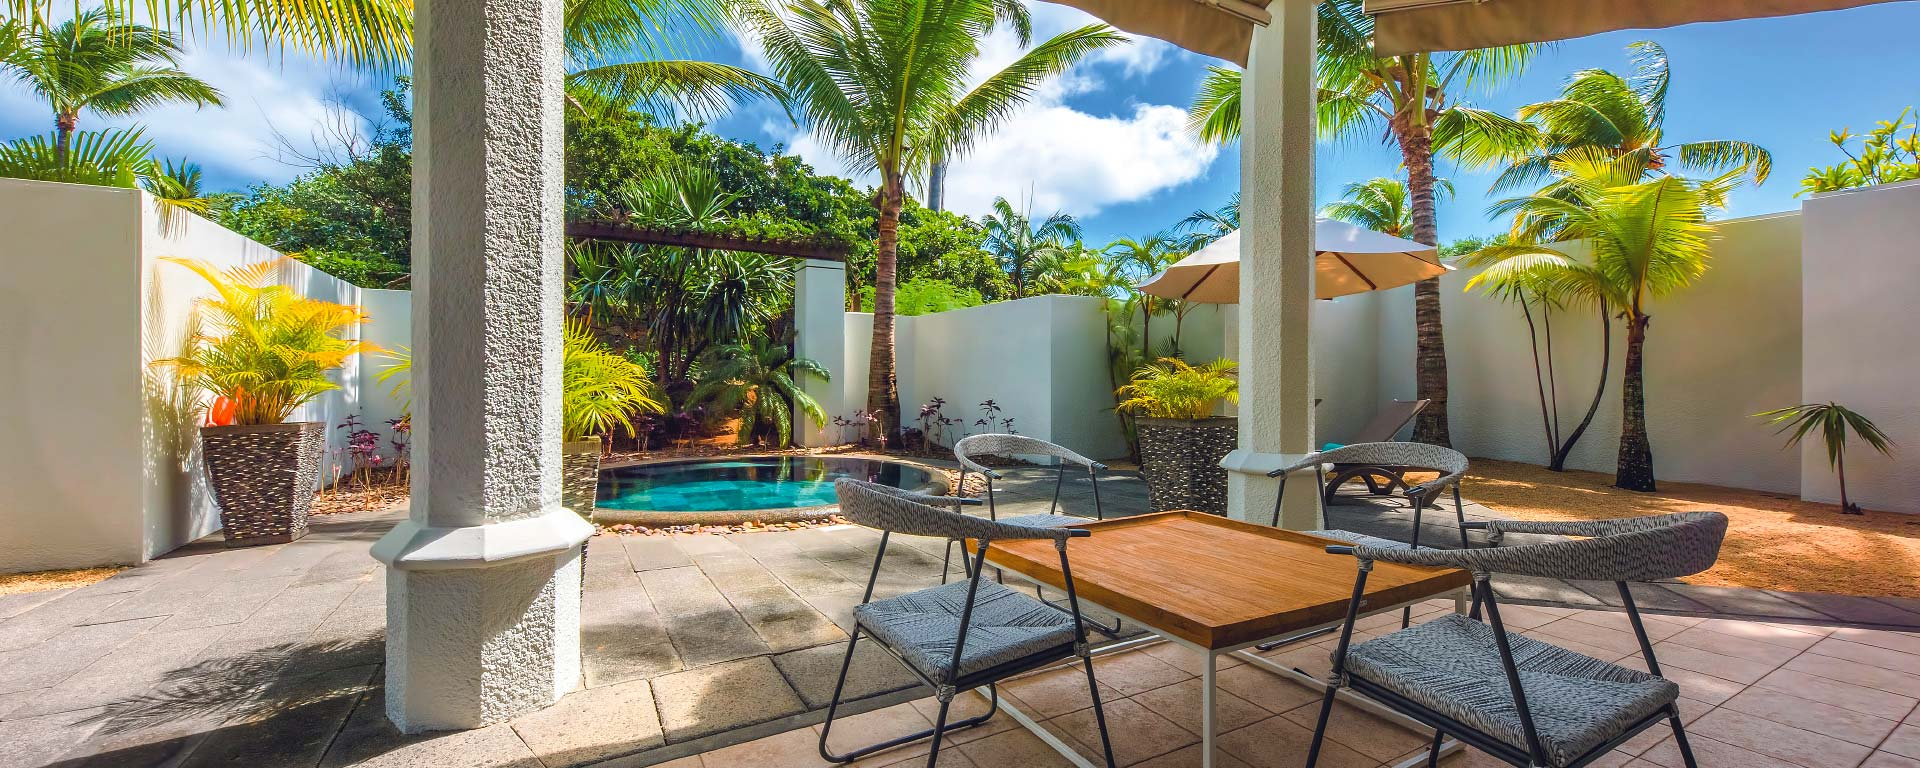 Mauricia Beachcomber Resort & Spa Mauritius Rooms